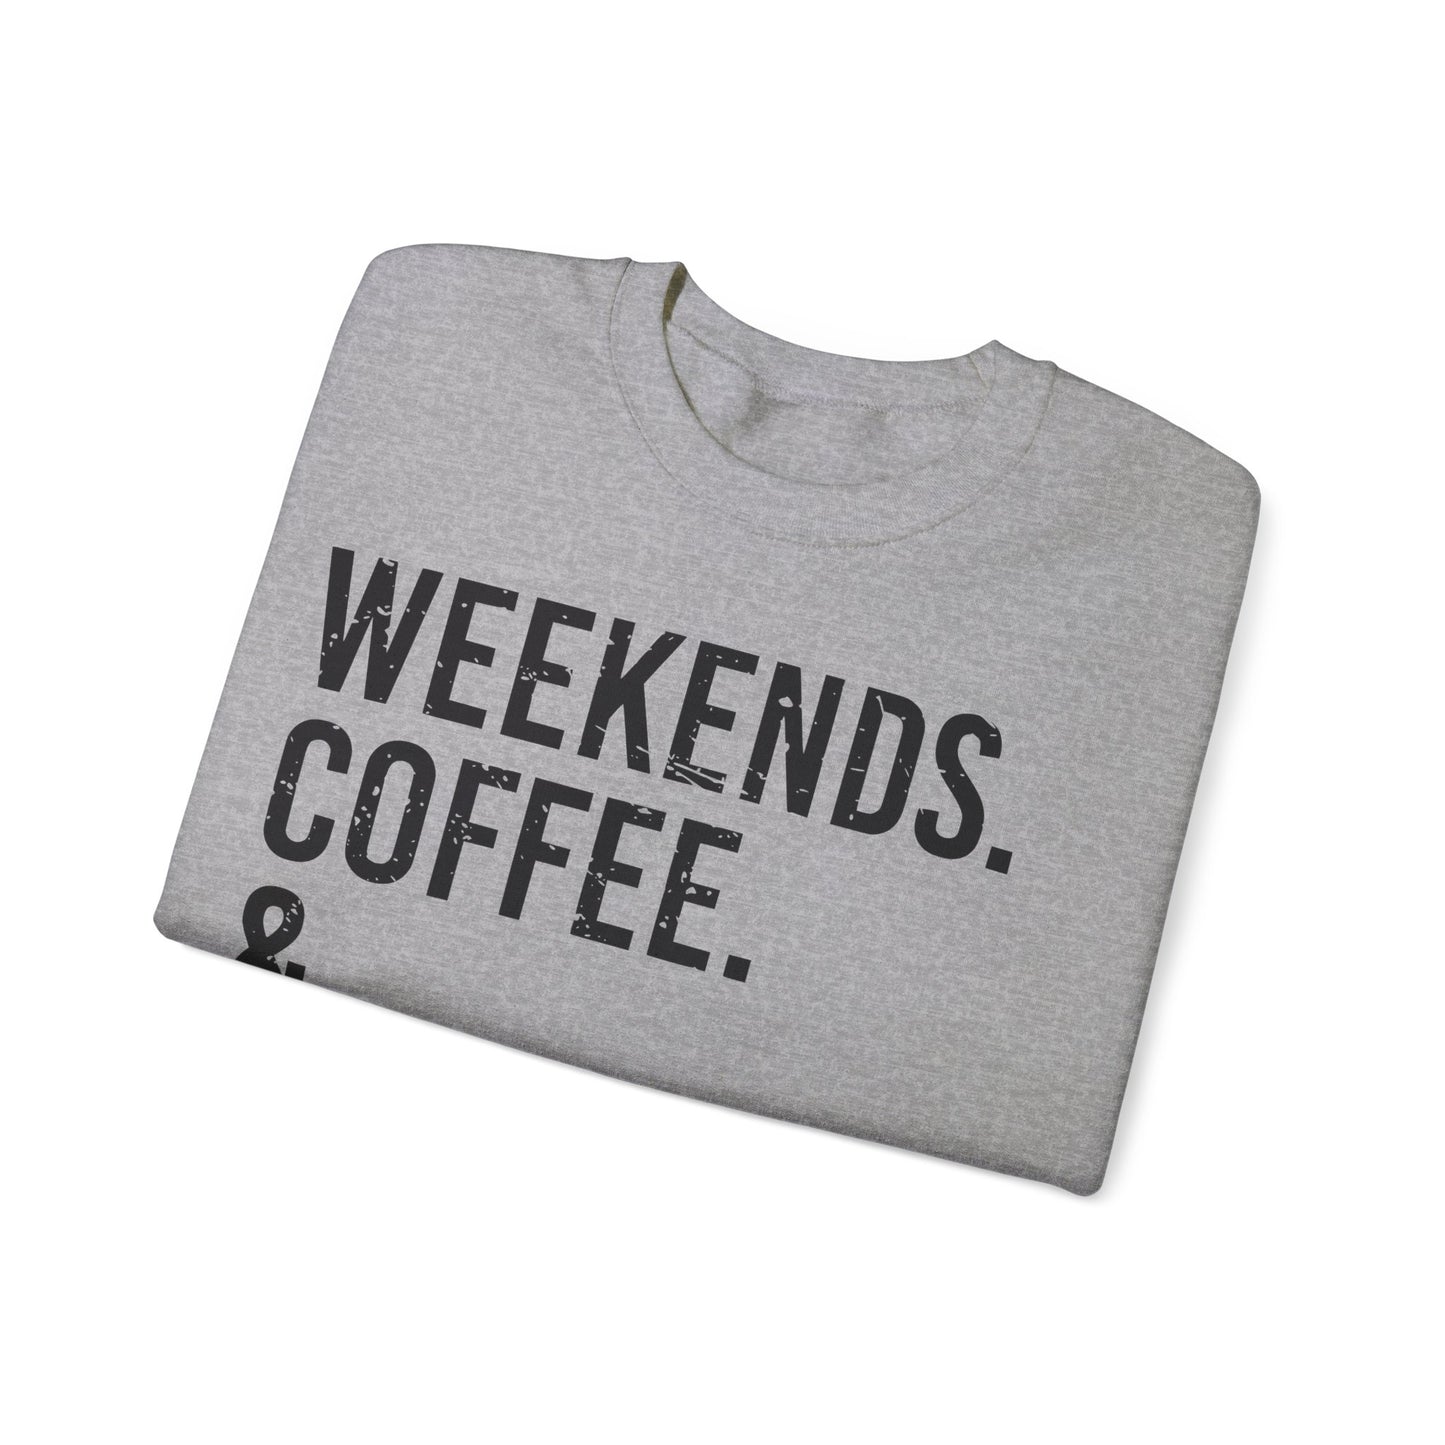 Weekends Coffee Sports - Crewneck Sweatshirt